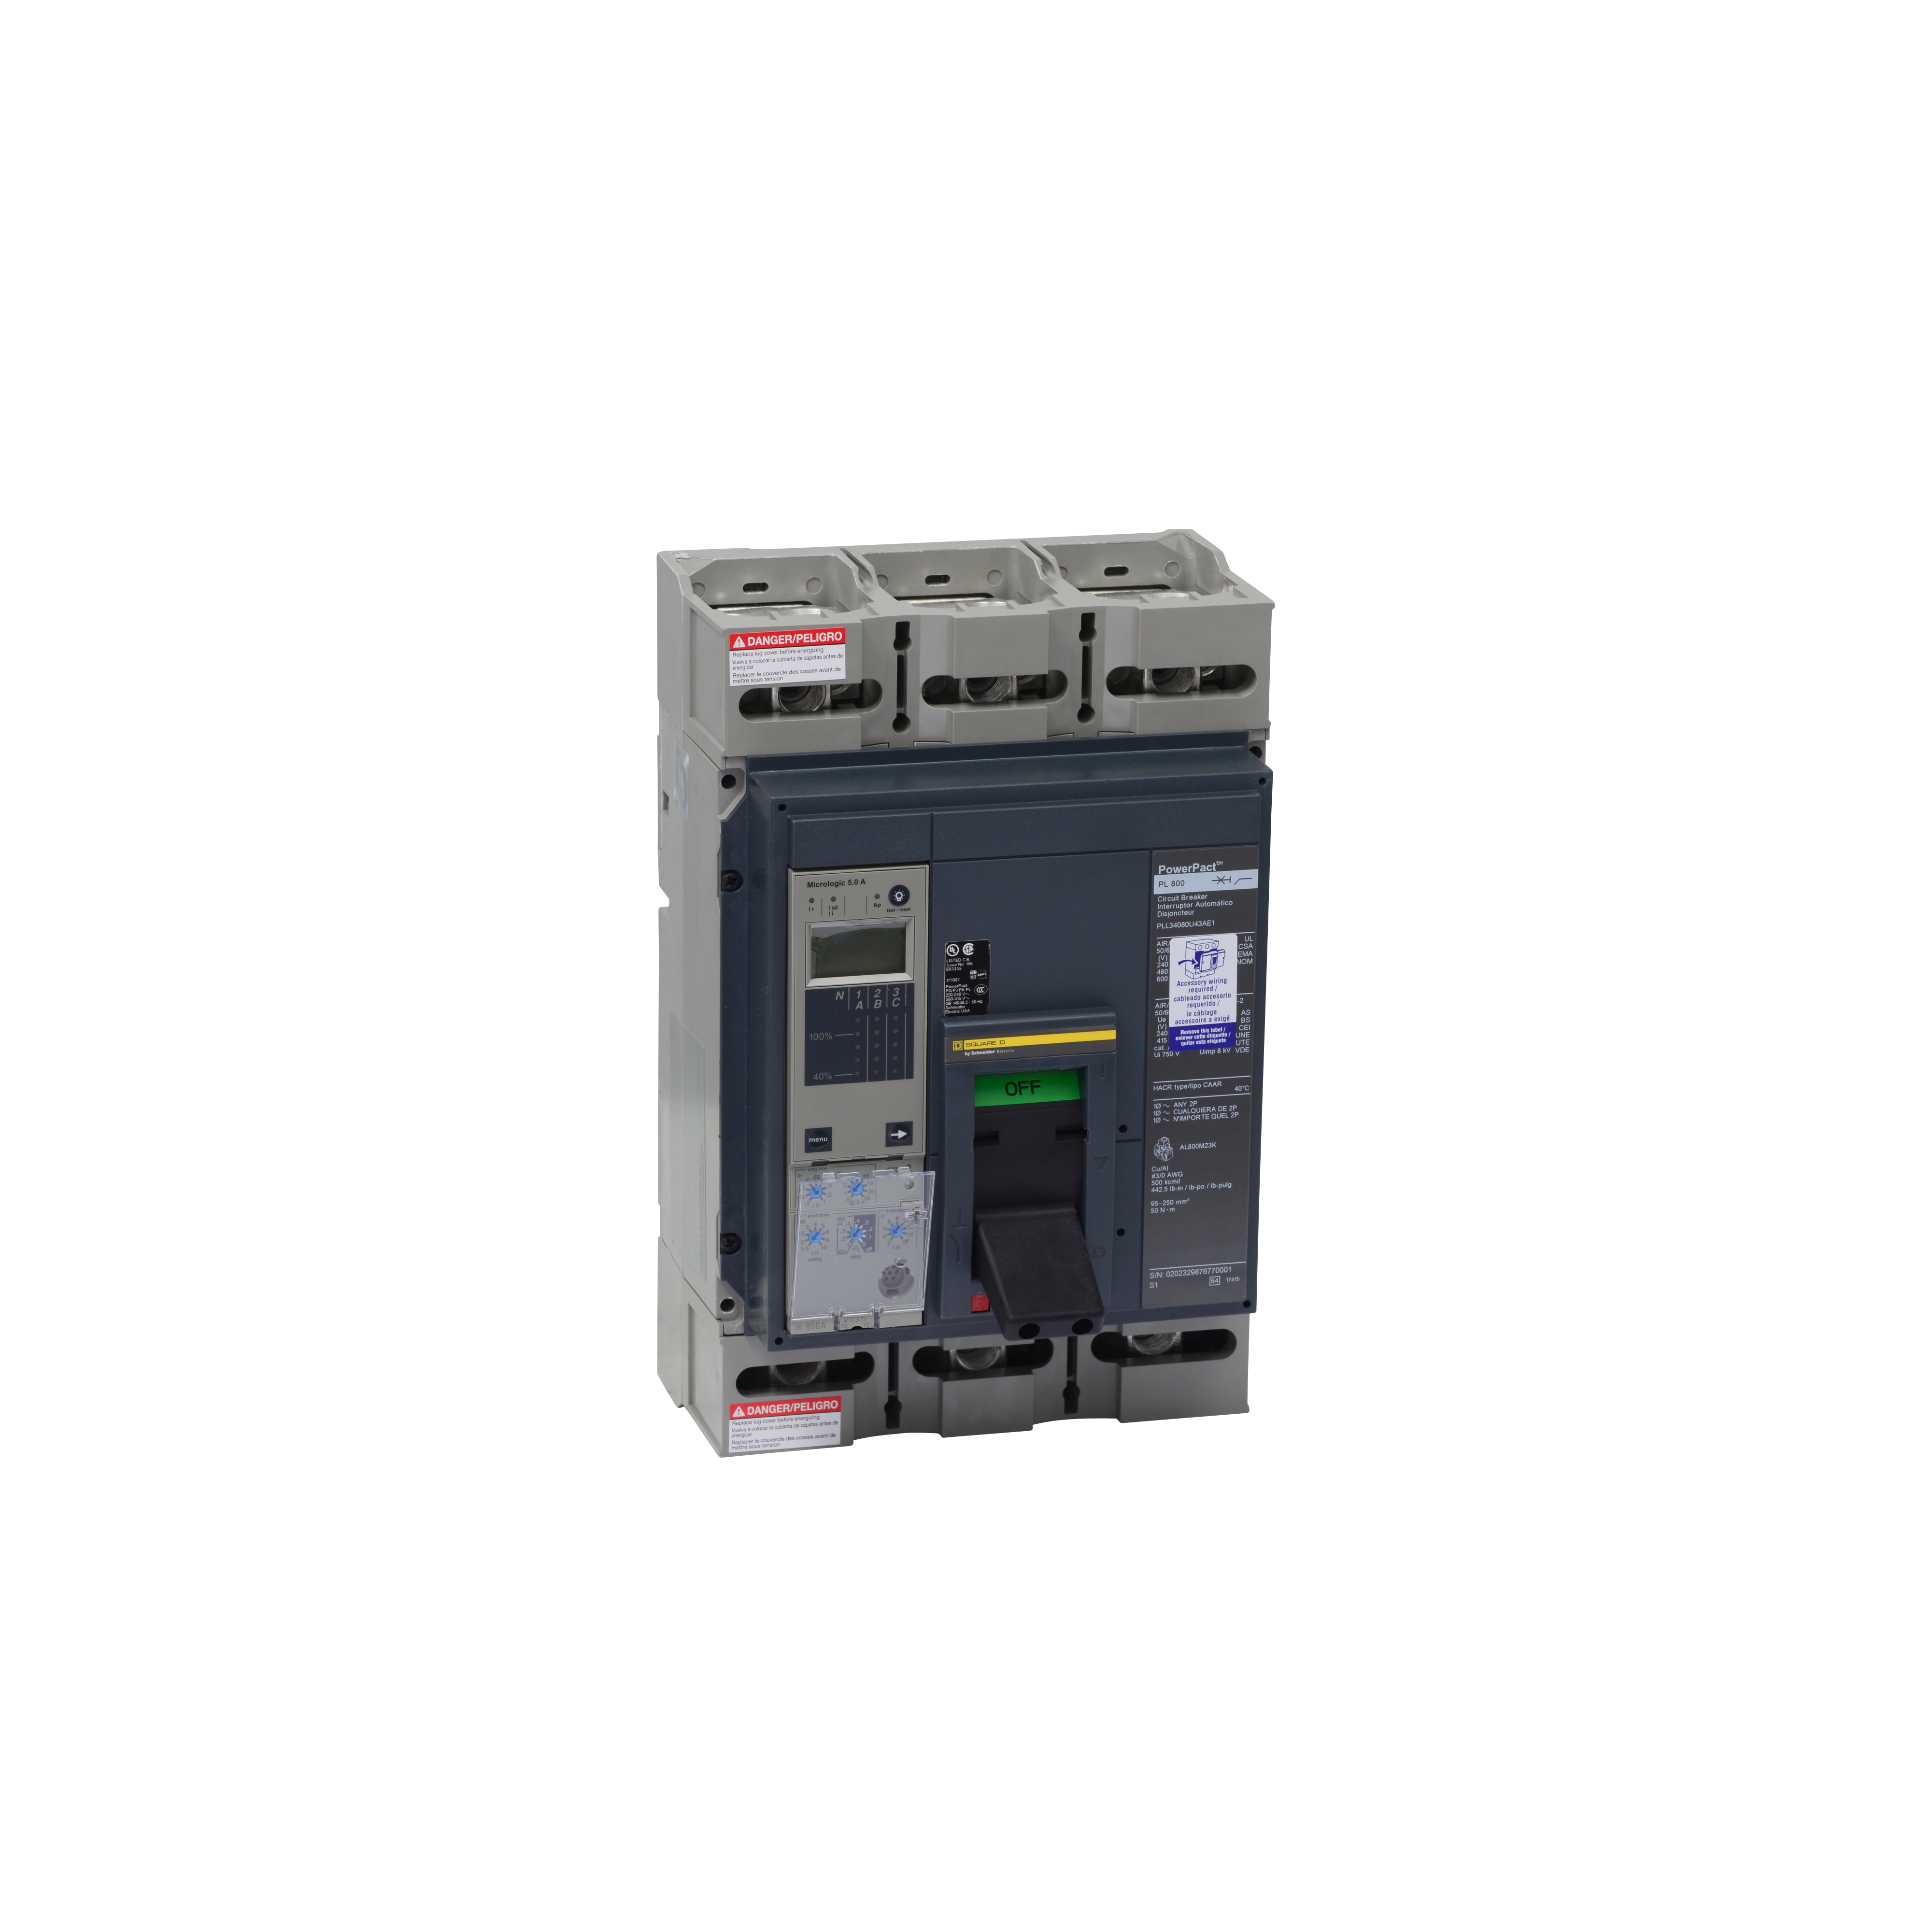 Circuit breaker, PowerPacT P, 600A, 3 pole, 600VAC, 18kA, lugs, Micrologic 6.0A, 100%